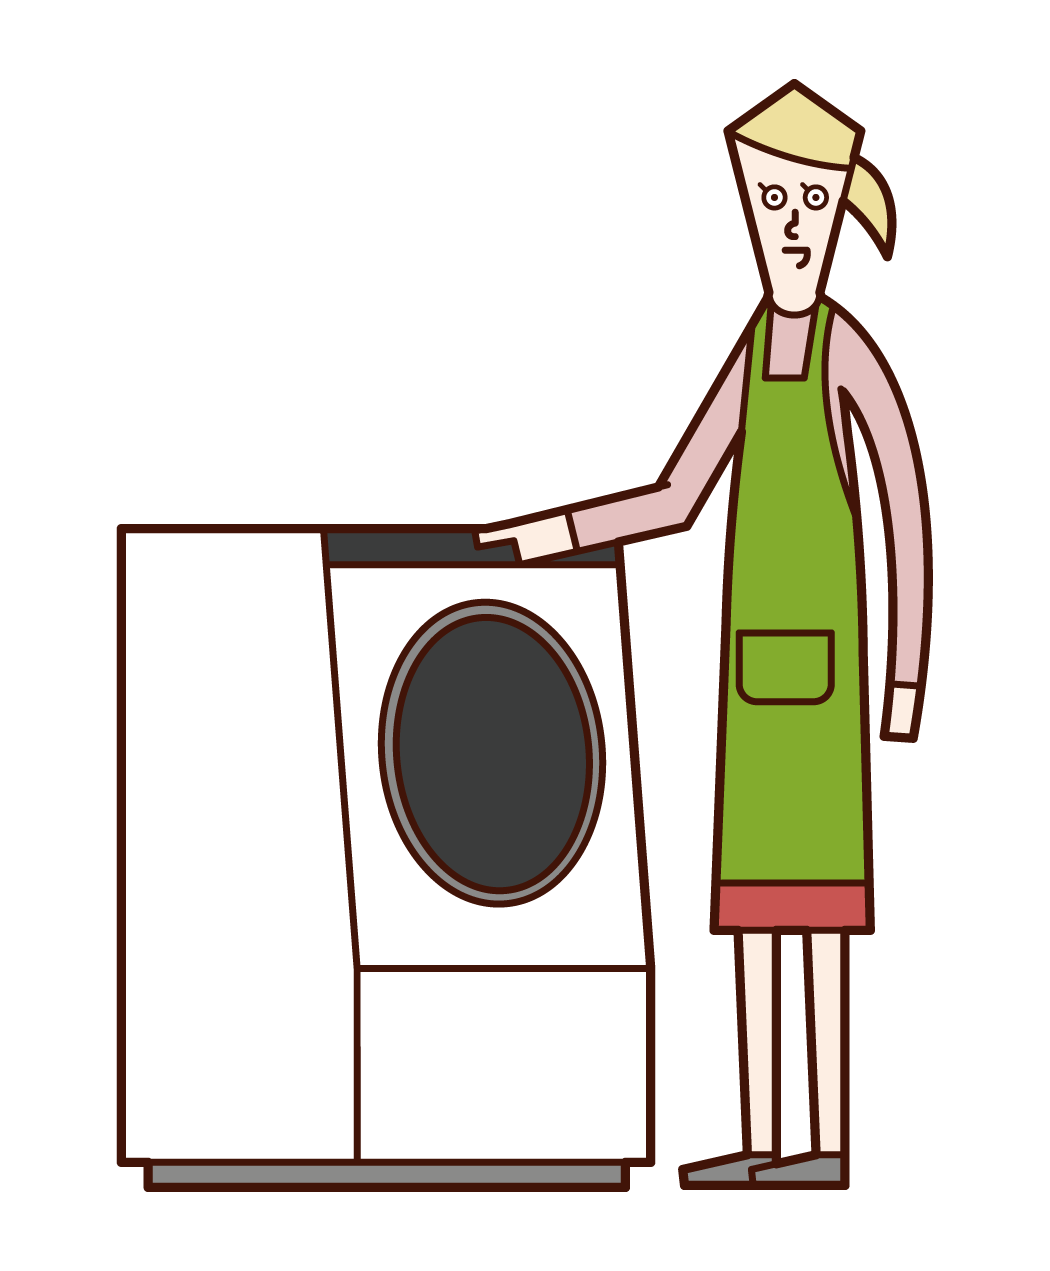 Illustration of a woman using a washing machine